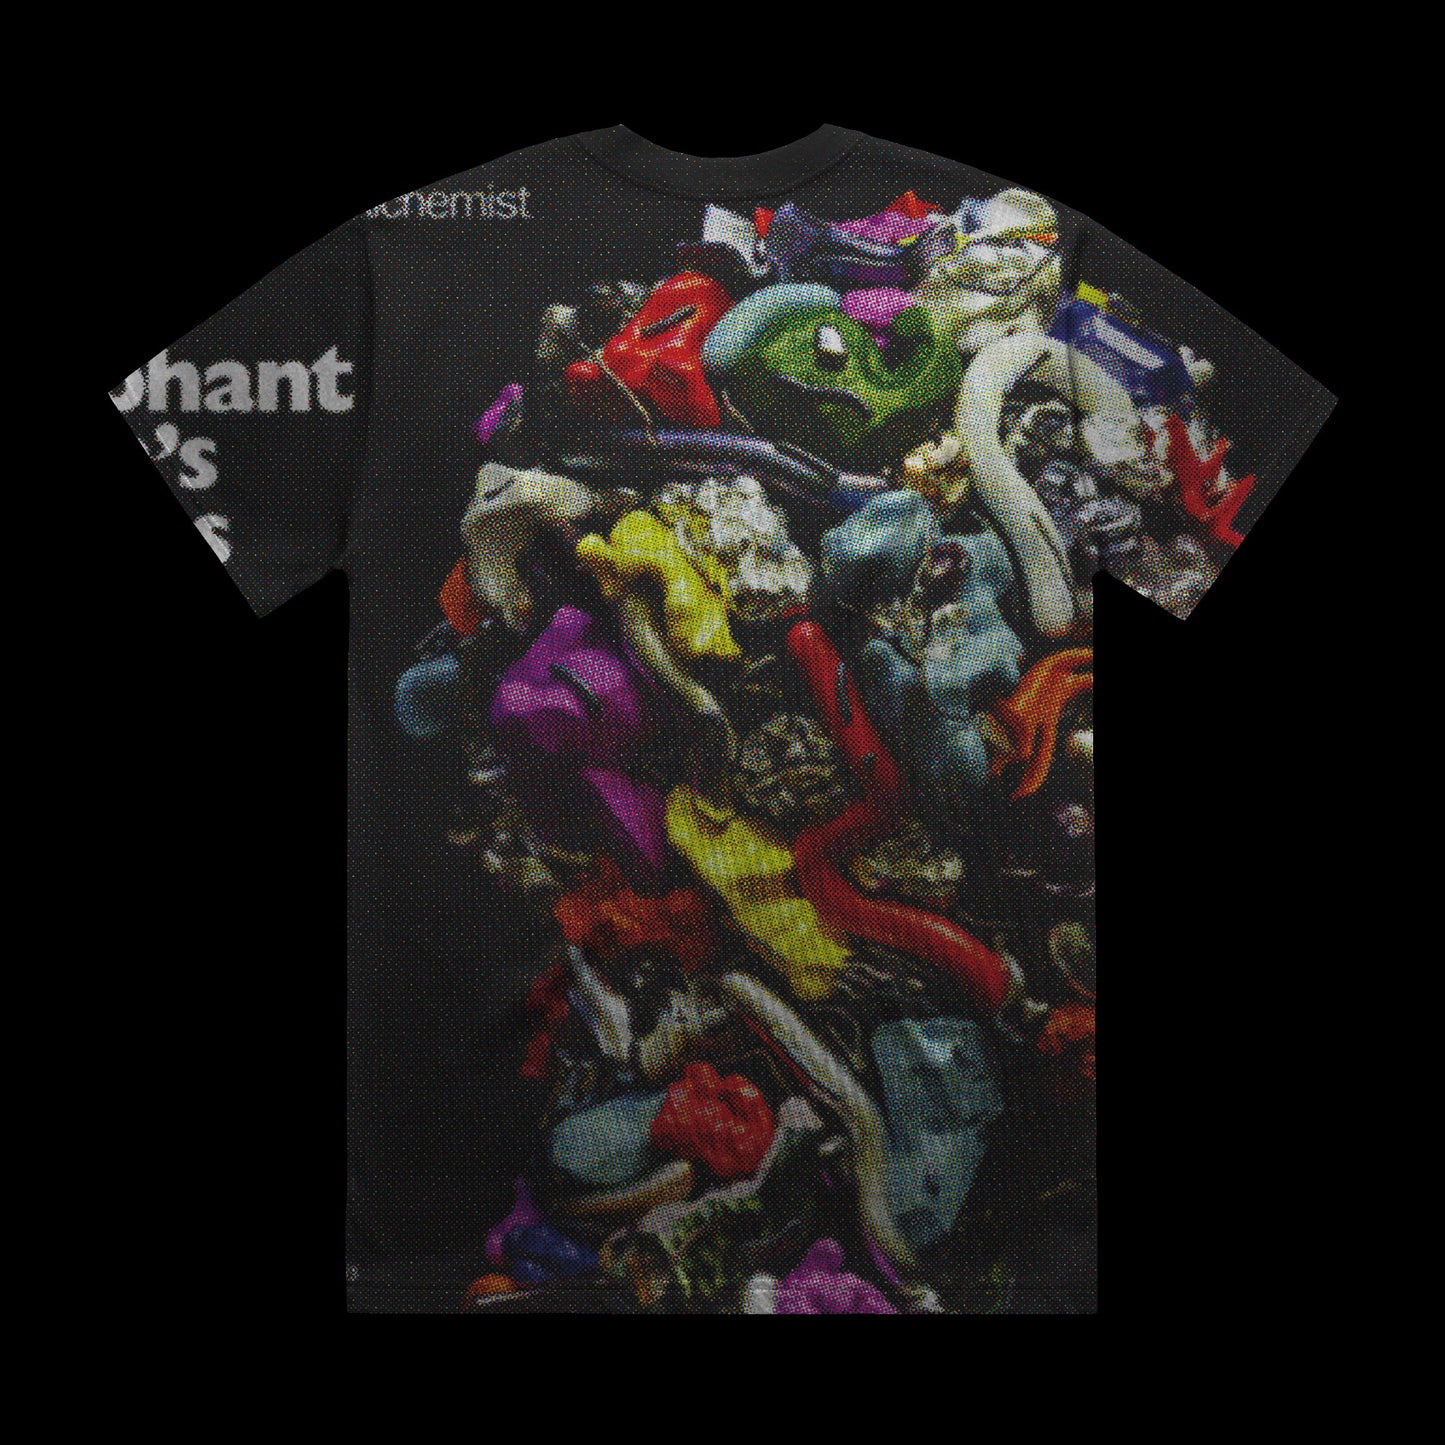 The Elephant Man's Bones (All-Over-Print Shortsleeve Shirt)